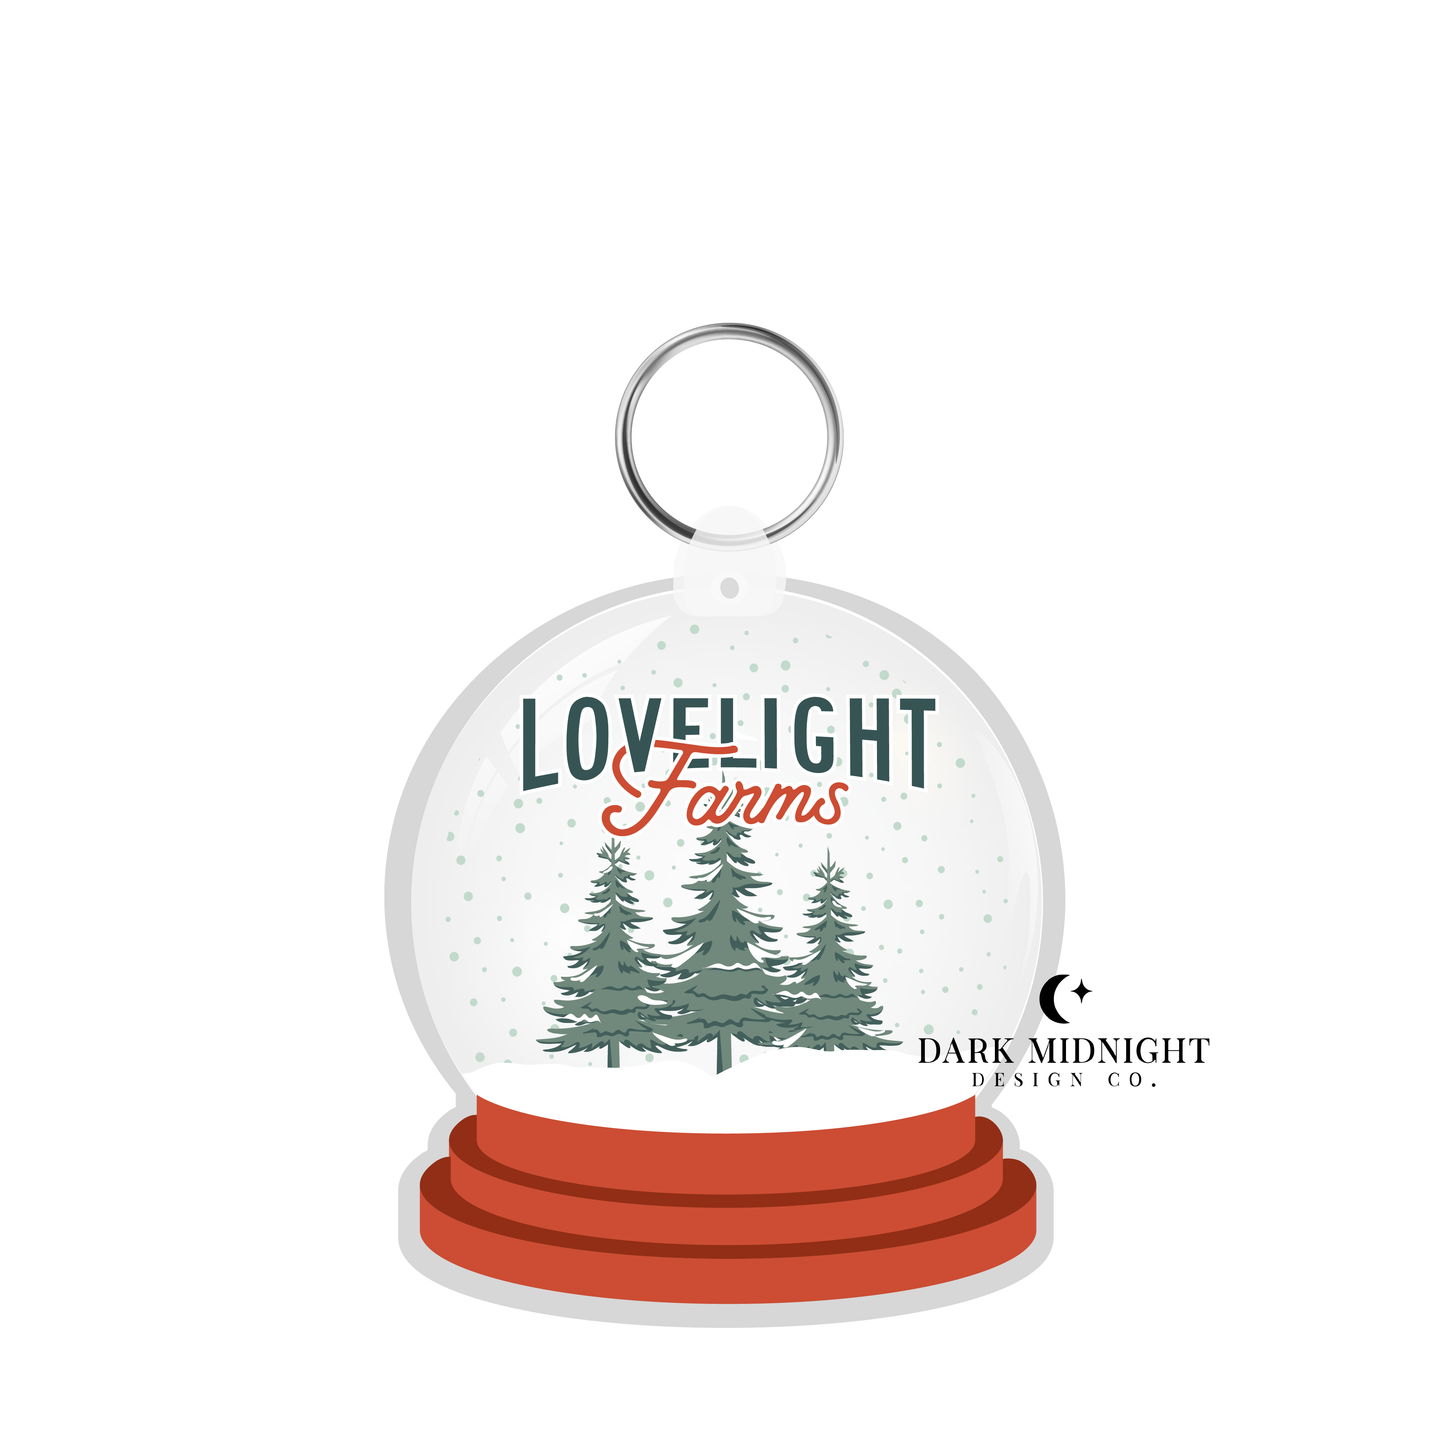 Lovelight Farms Snowglobe Keychain - Officially Licensed Lovelight Farms